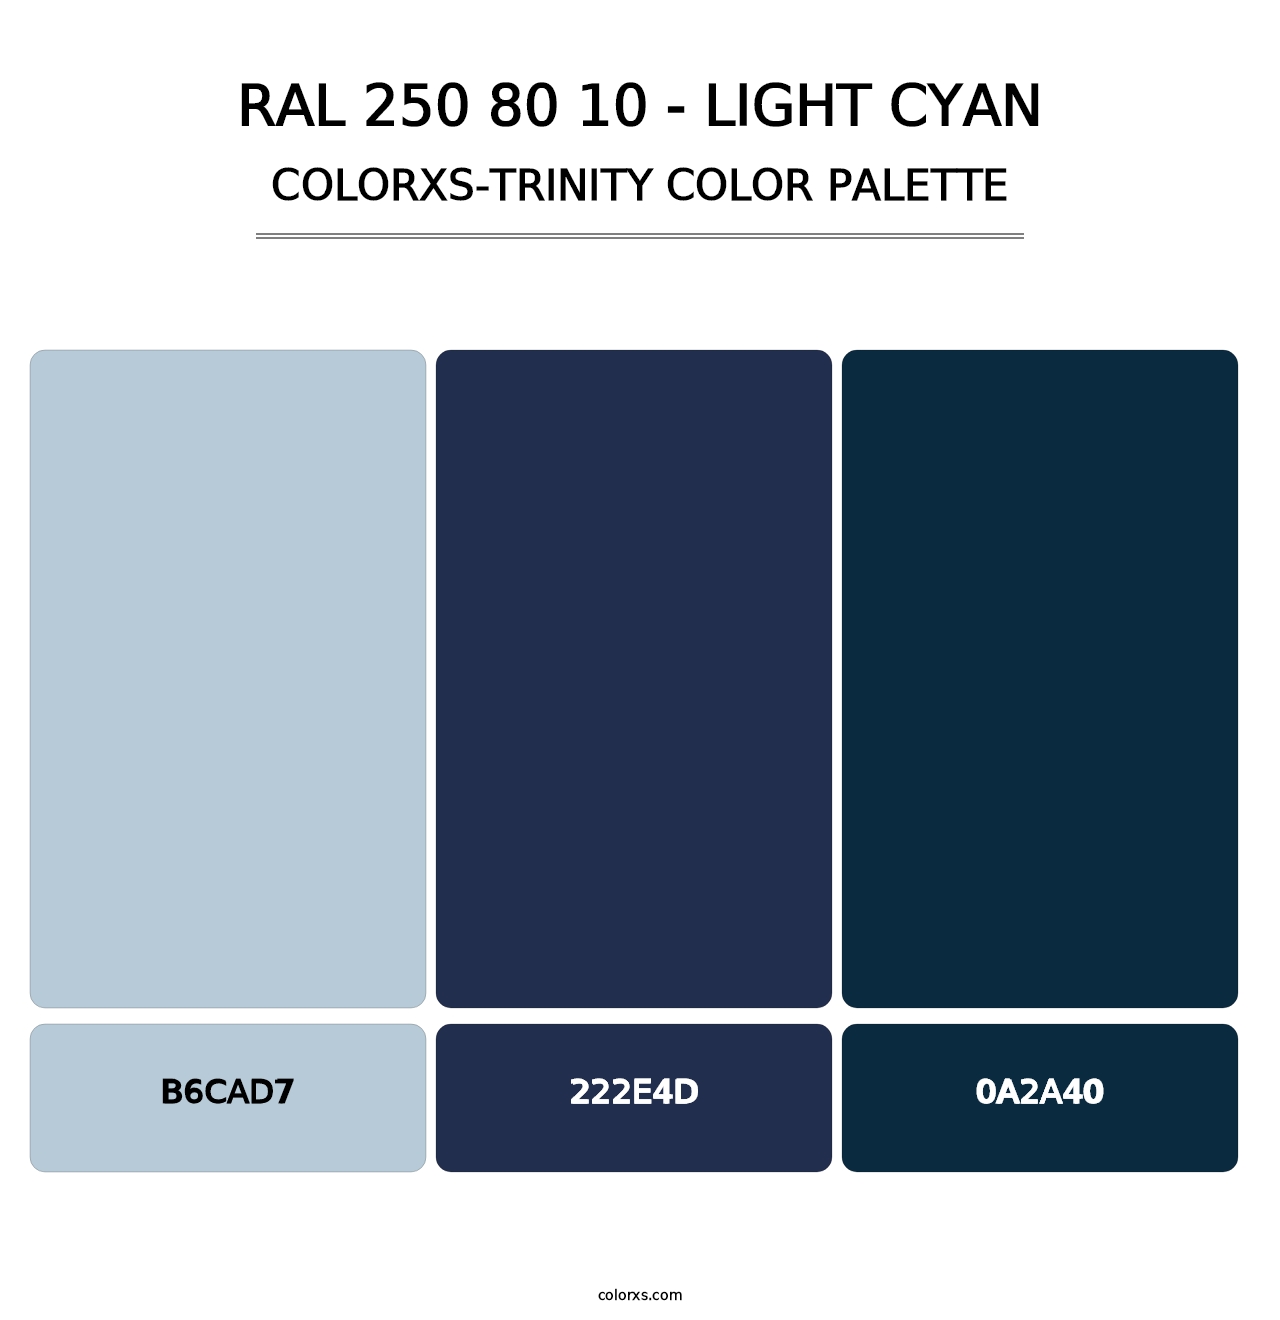 RAL 250 80 10 - Light Cyan - Colorxs Trinity Palette